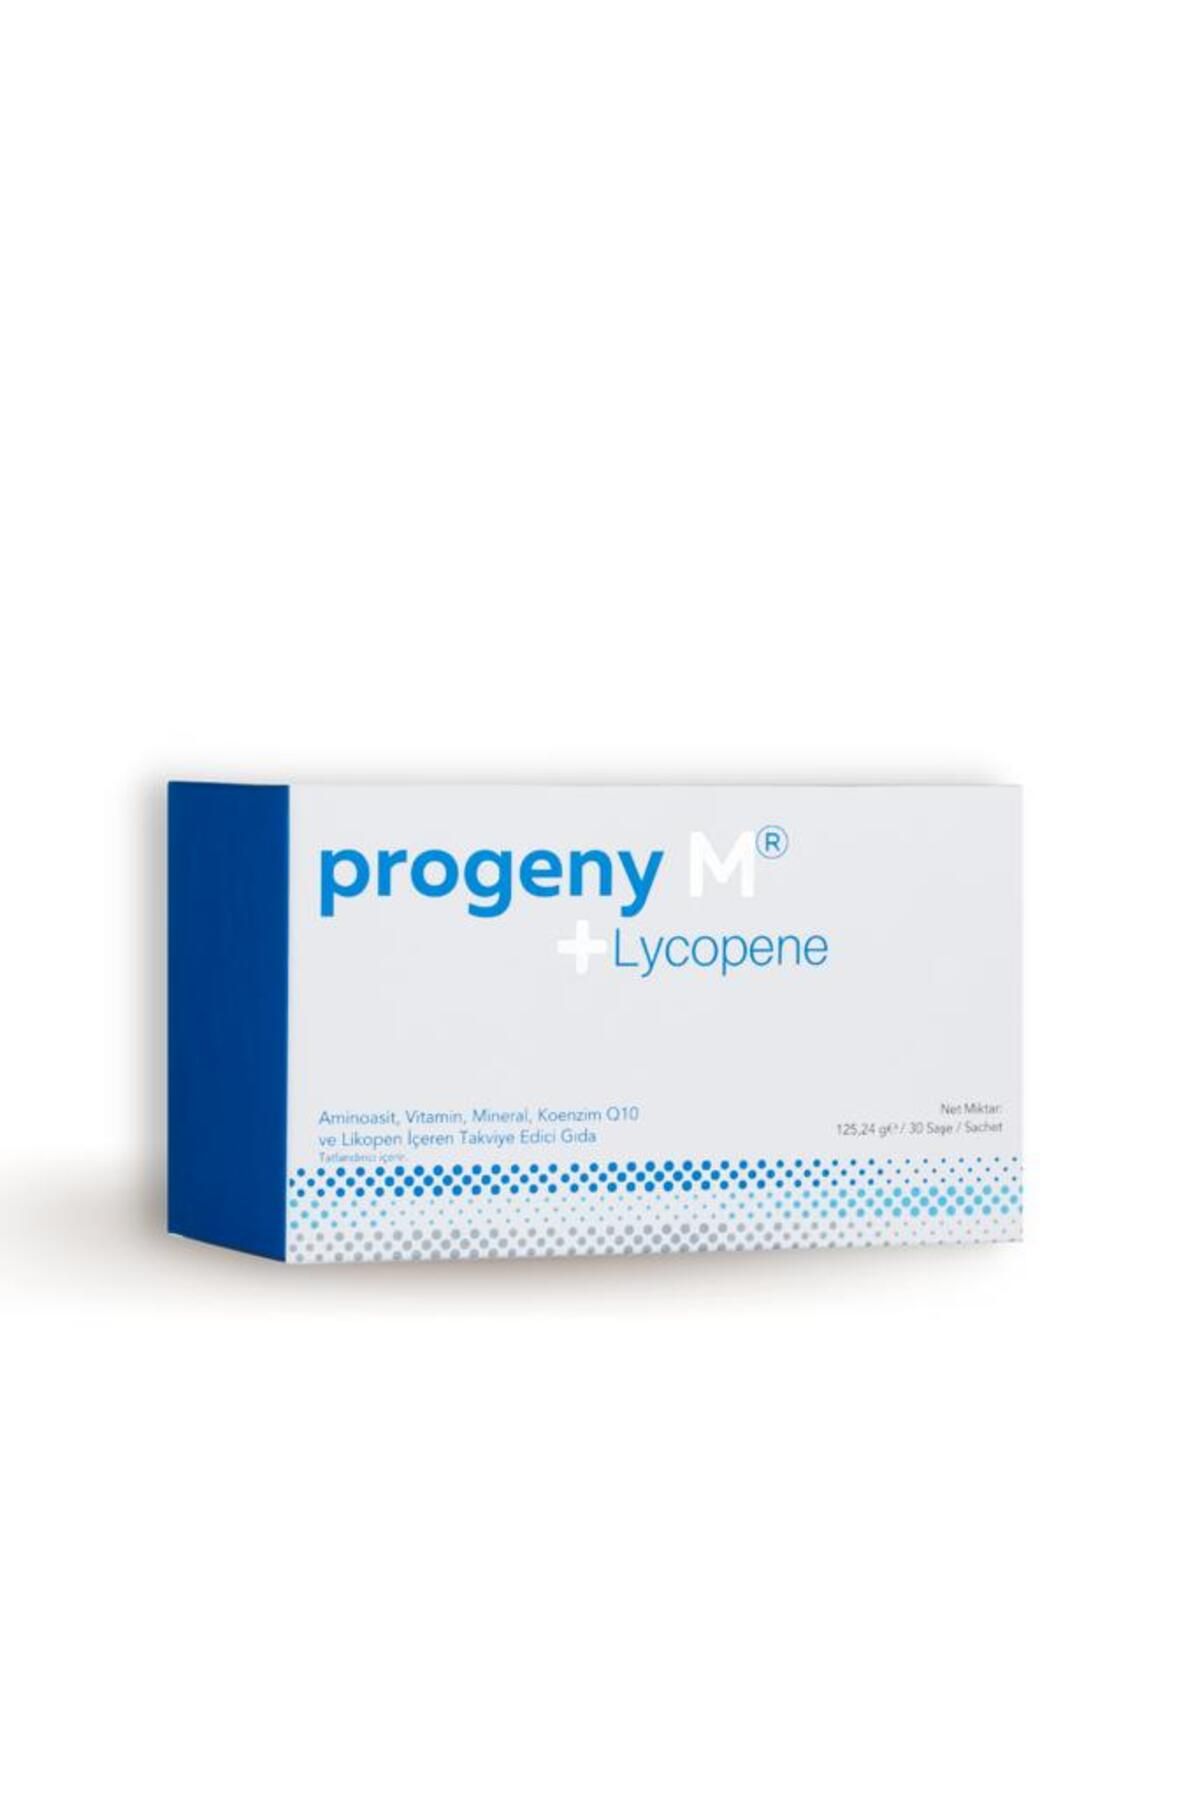 PROGENY M LYCOPENE Progeny M+lycopene 30 Saşe